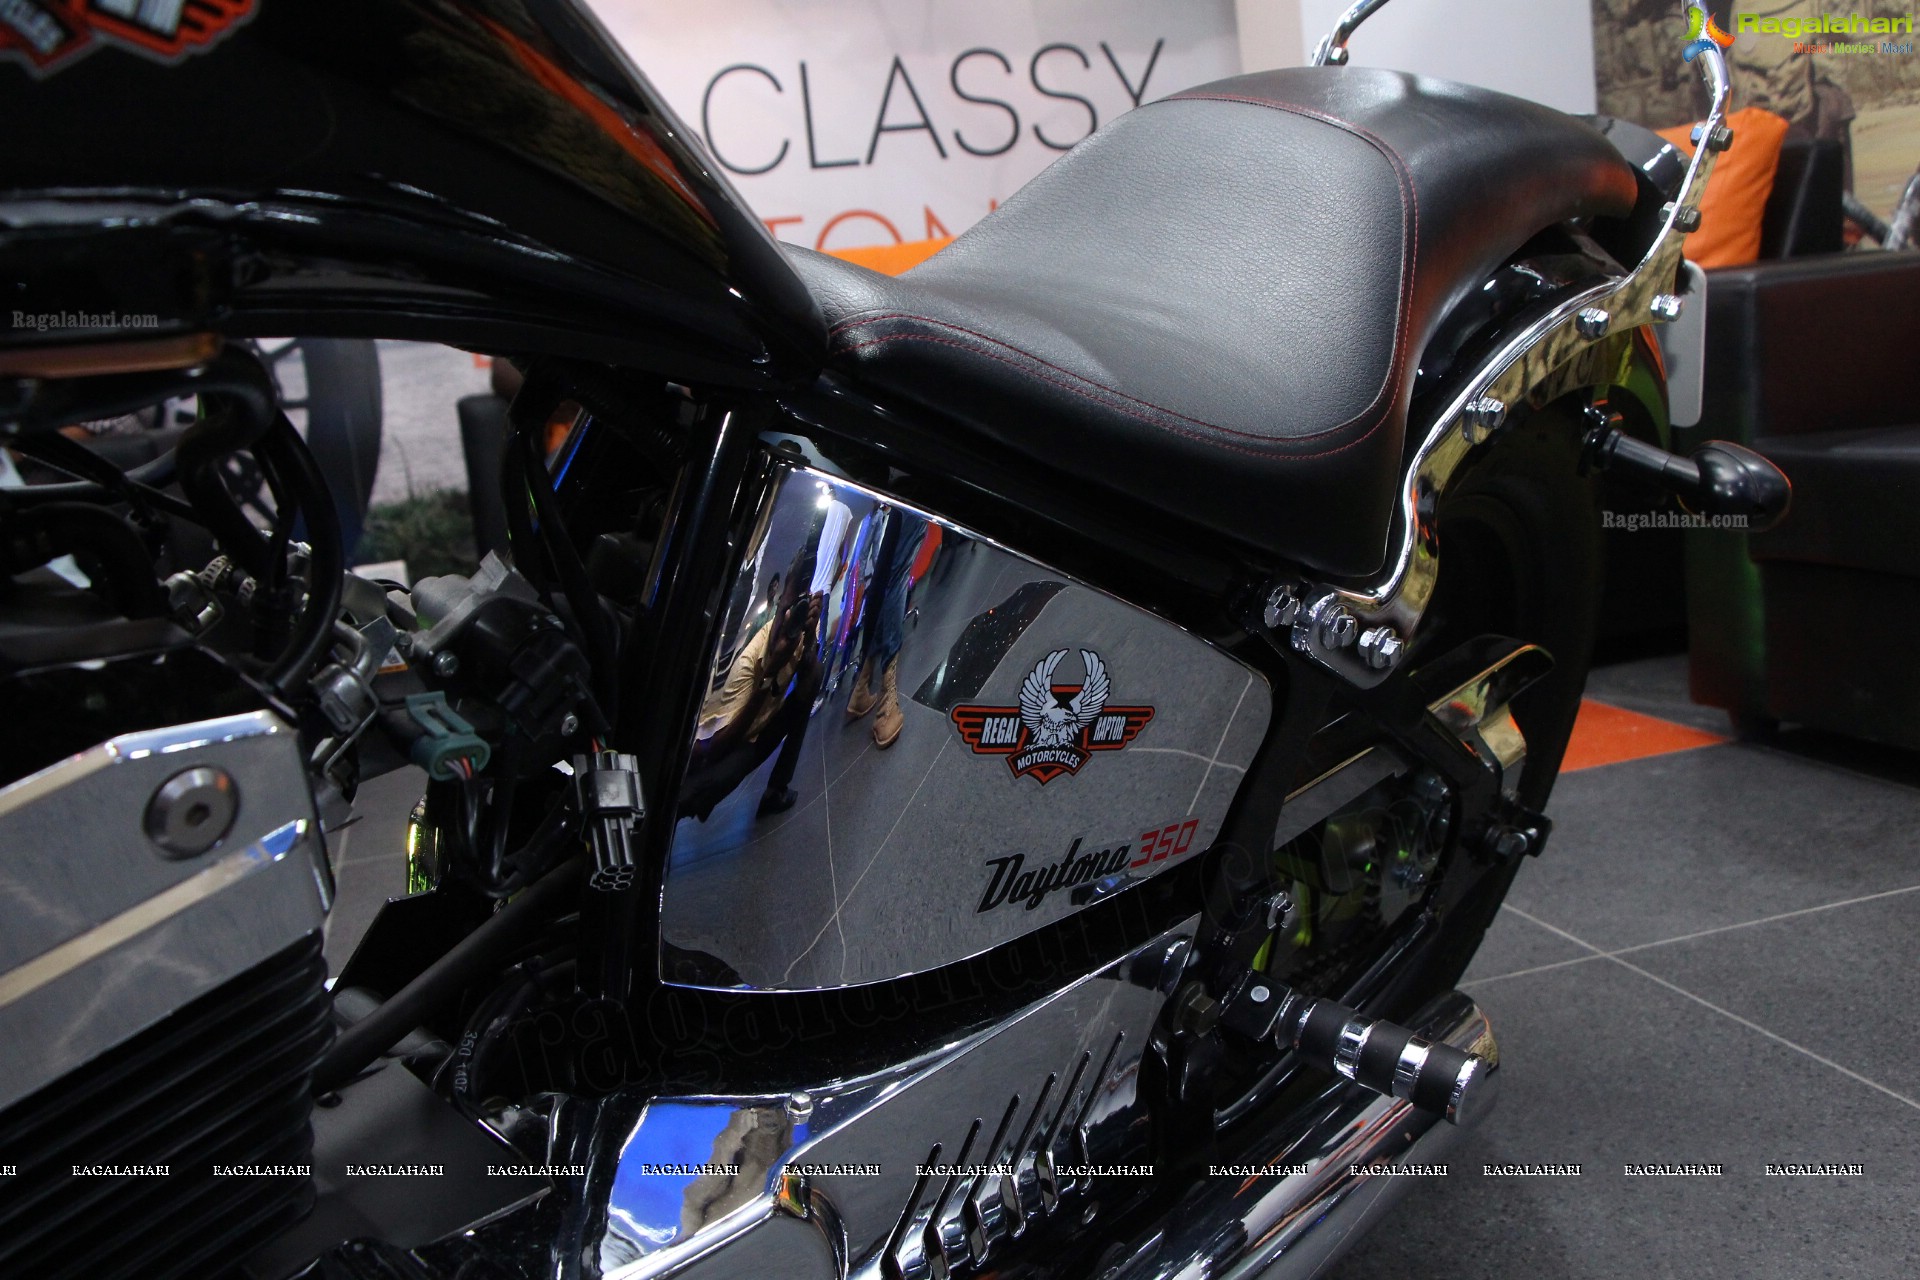 Regal Raptor Motor Cycles Showroom Launch in Hyderabad